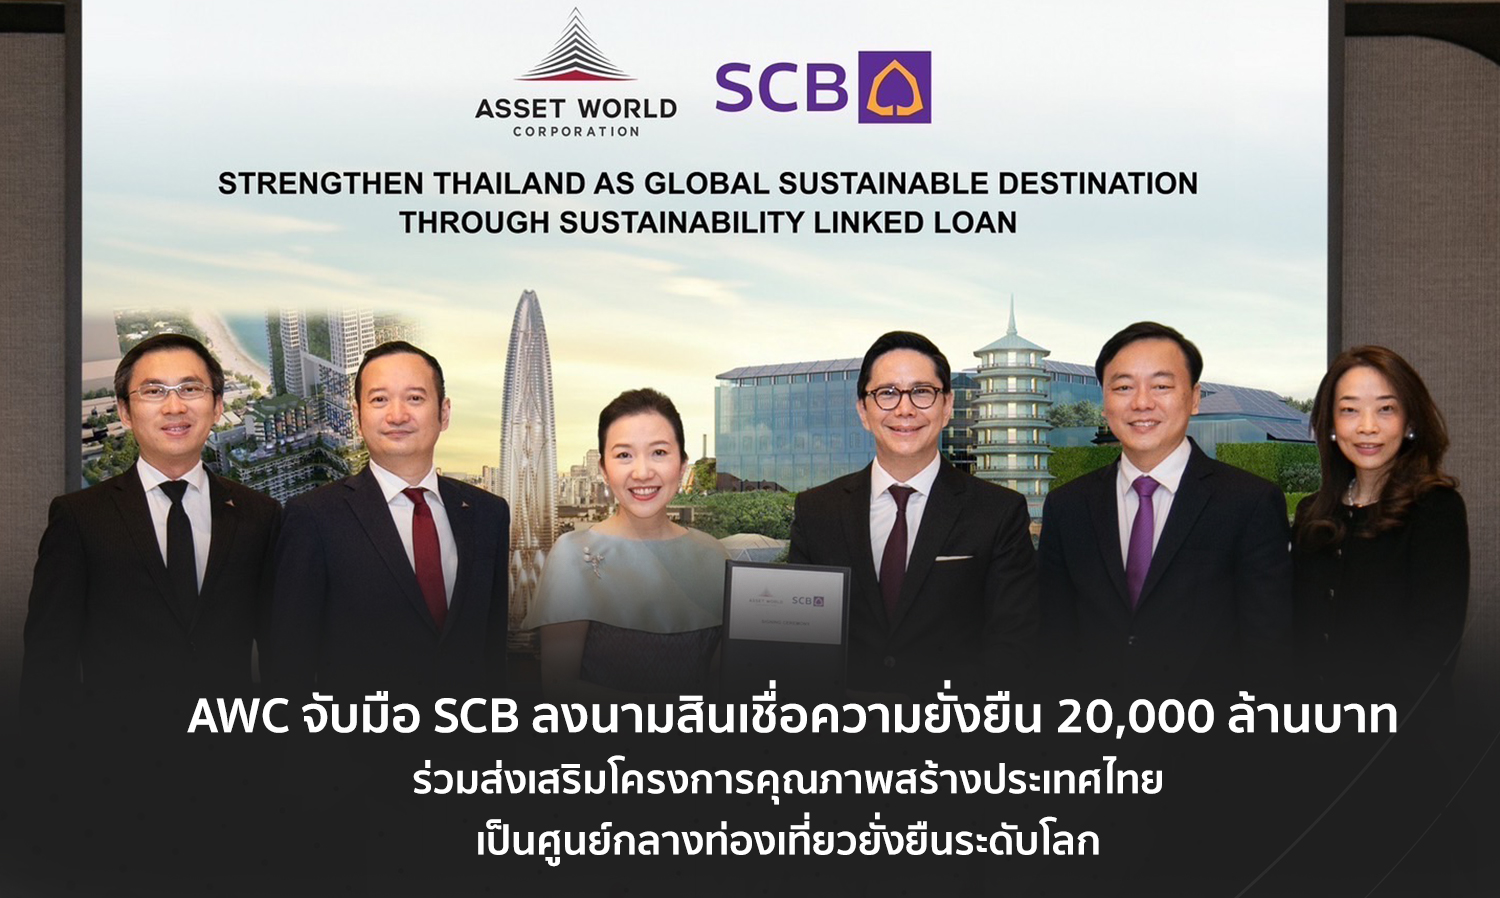 AWC จับมือ SCB ลงนามสินเชื่อความยั่งยืน 20,000 ล้านบาท ร่วมส่งเสริมโครงการคุณภาพสร้างประเทศไทย เป็นศูนย์กลางท่องเที่ยวยั่งยืนระดับโลก